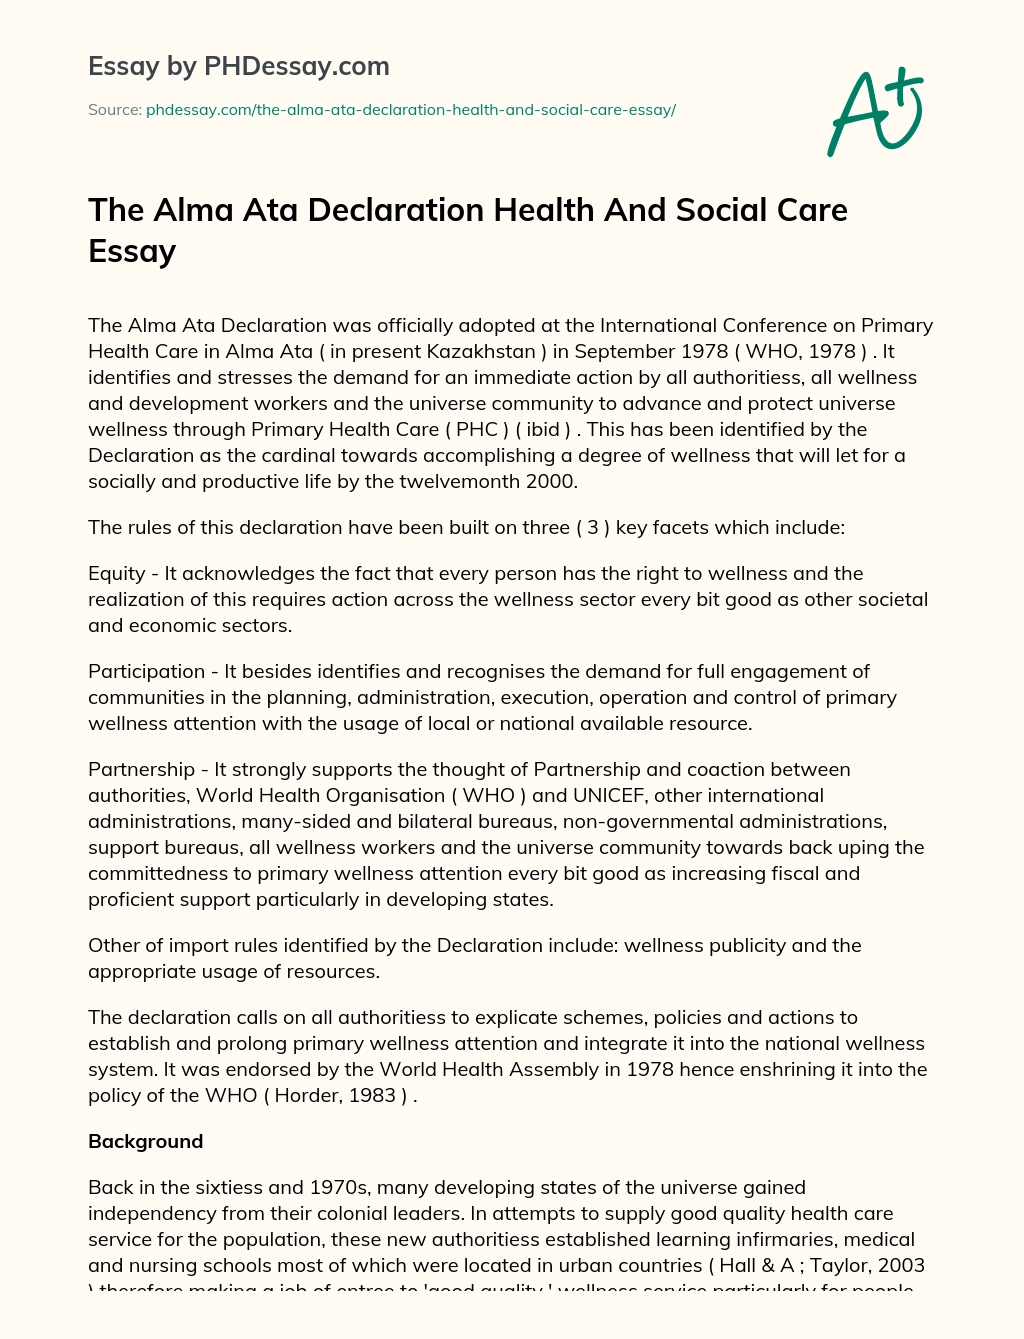 The Alma Ata Declaration Health And Social Care Essay essay